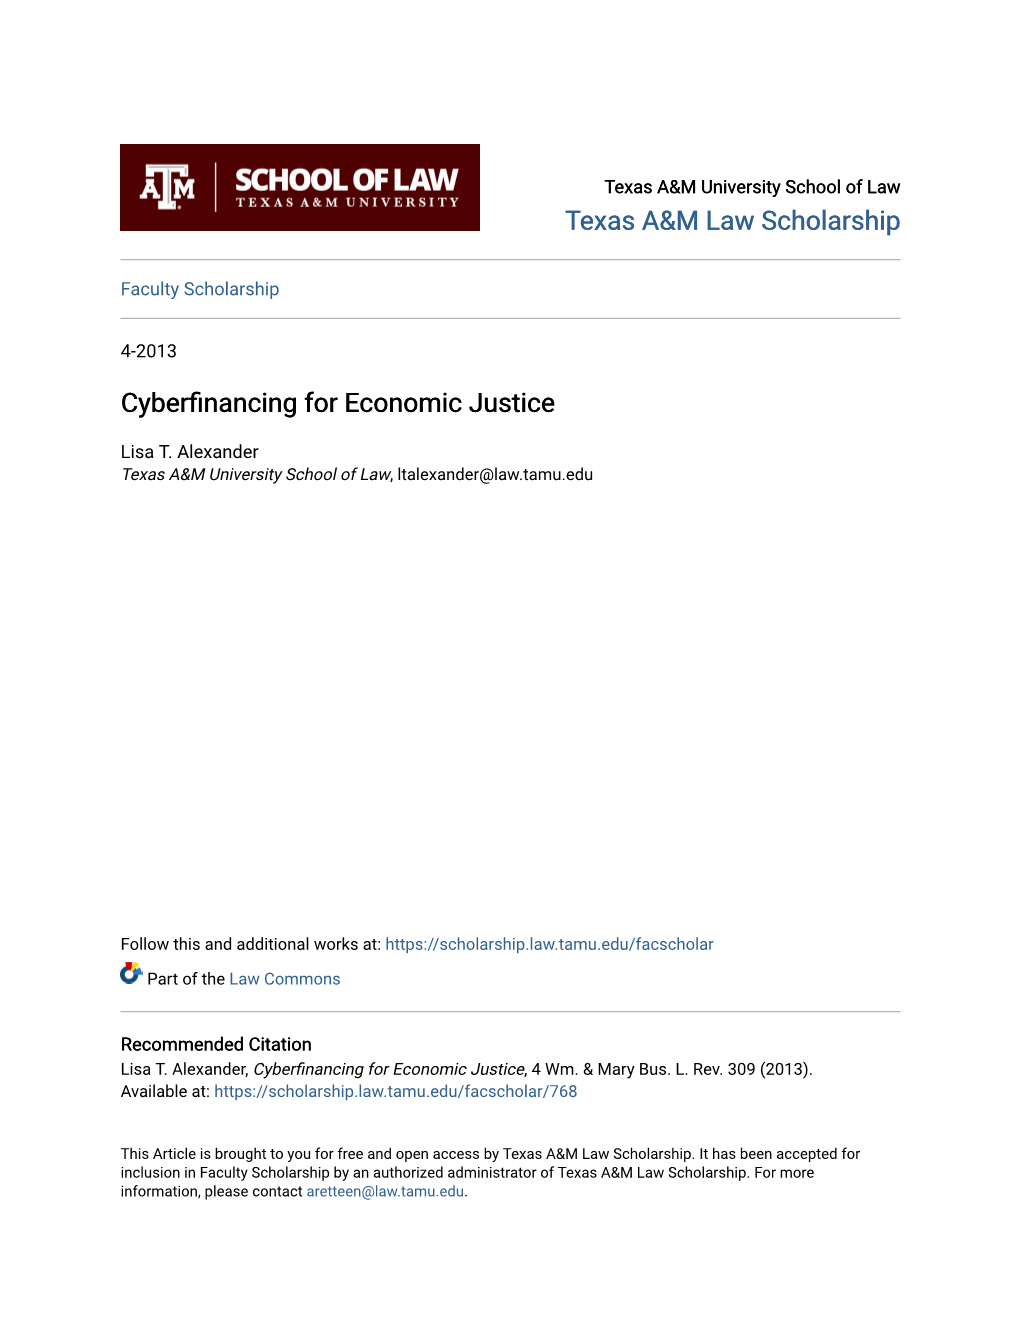 Cyberfinancing for Economic Justice, 4 Wm